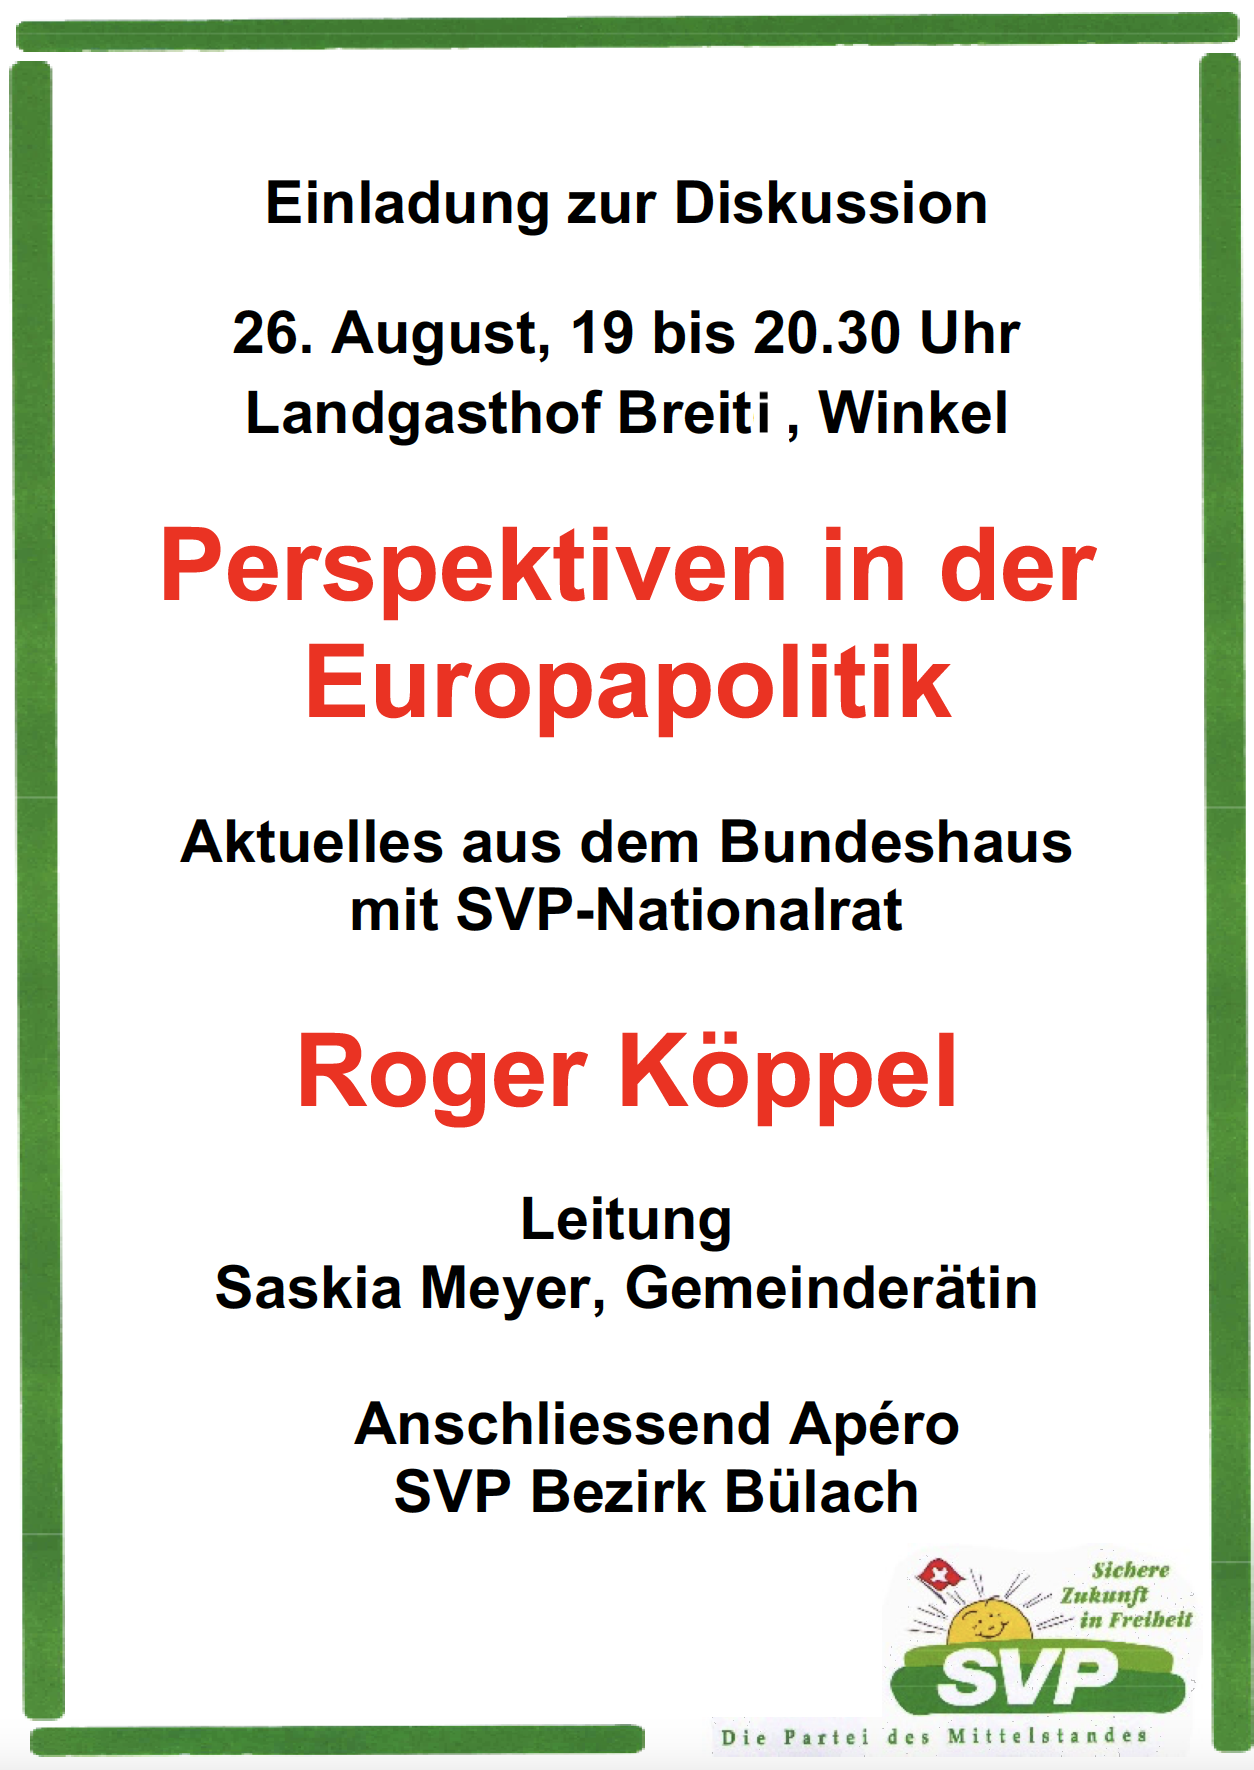 SVP-Nationalrat Roger Köppel spricht über die Perspektiven in der Europapolitik